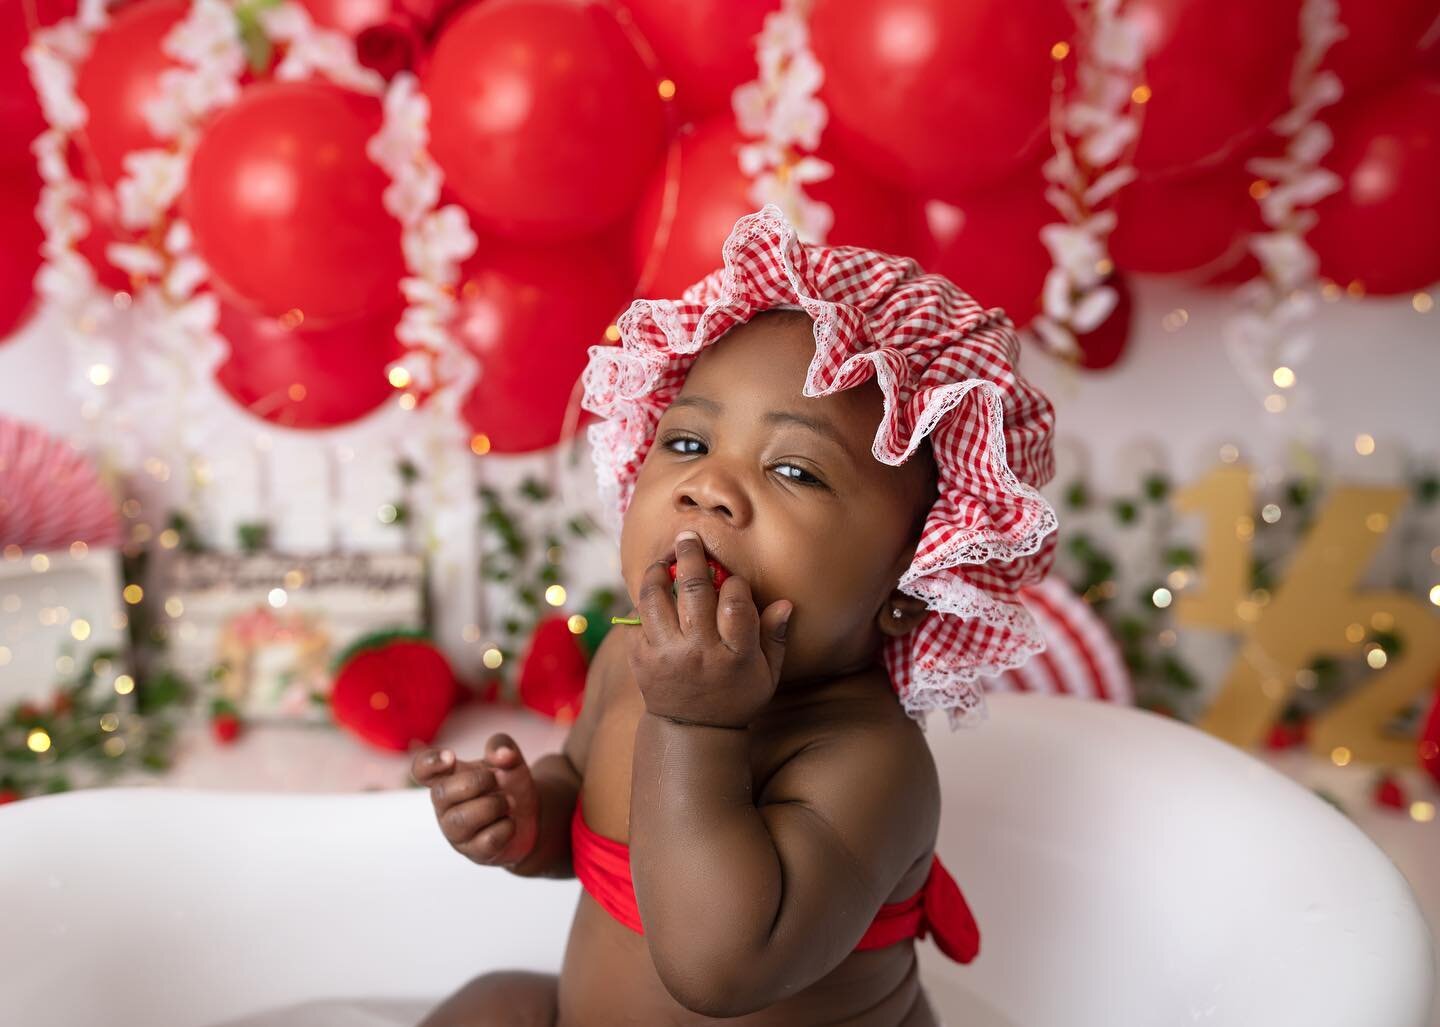 Babies love their fruit! This cap from @littlemissatasha went perfectly with this Strawberry themed Session .
.
.
.
.
.

#baby #firstbirthdayphotoshoot
#babysfirstbirthday #cakesmash 
#newbornbaby #mommytobe #reelsinstgram #newbornphotography #babyph